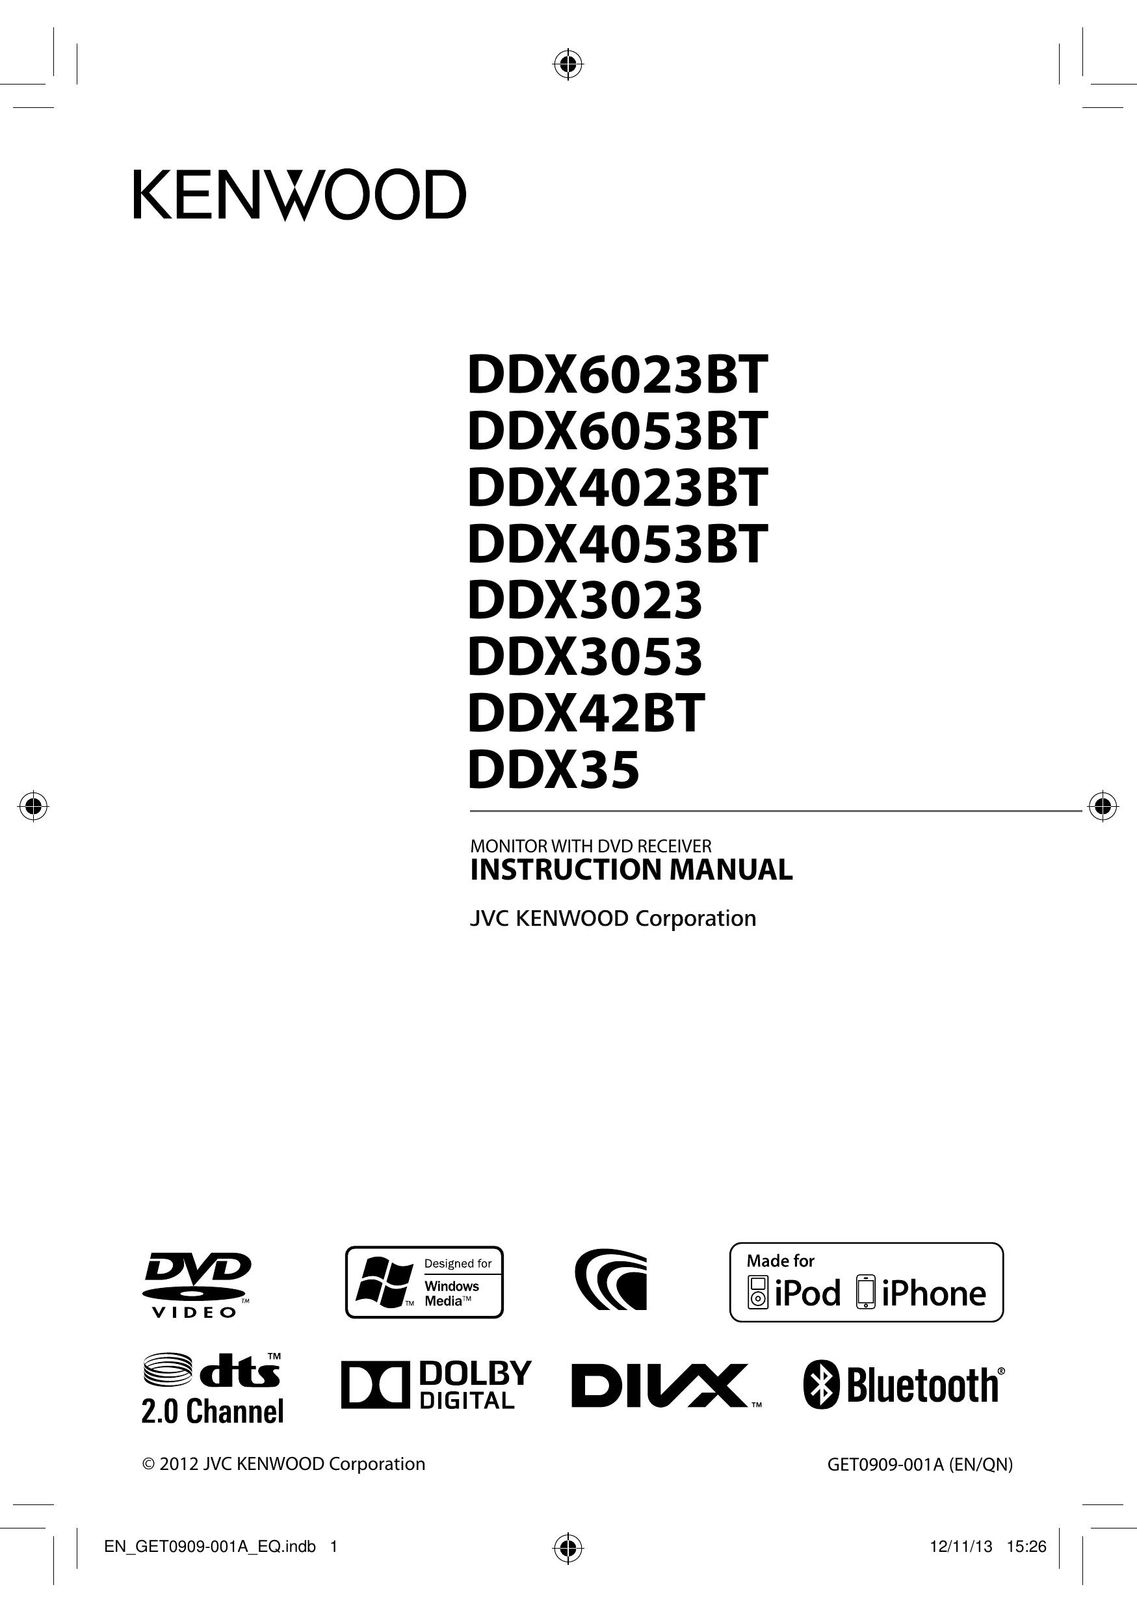 Kenwood DDX35 Car Video System User Manual